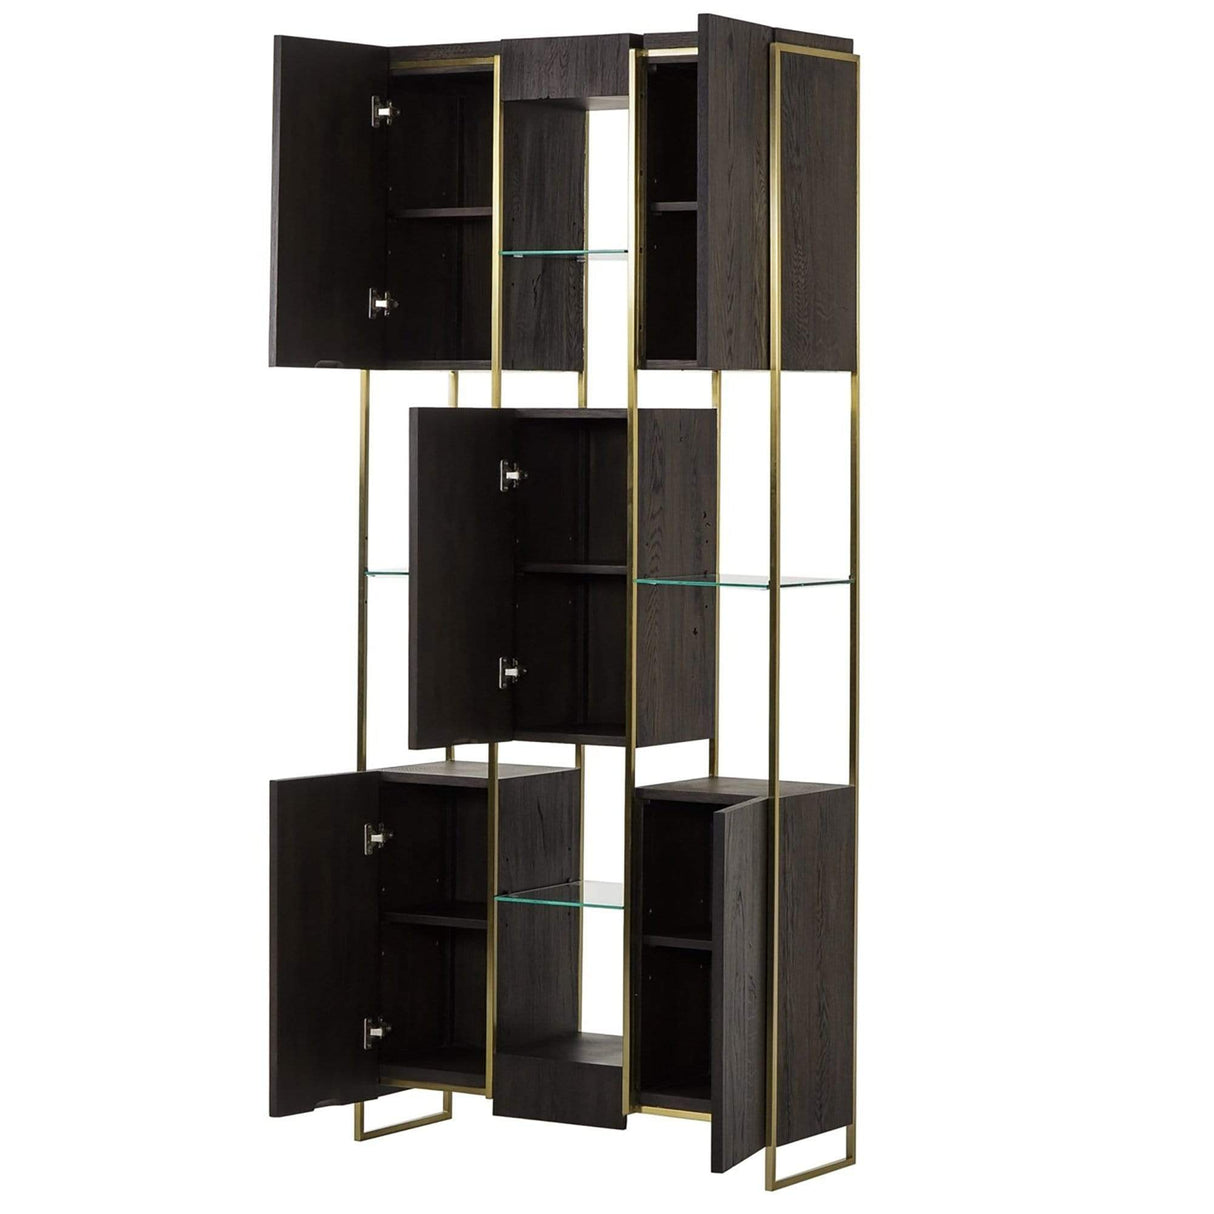 Thomas Bina Marley Bookcase - Large Dark Oak Furniture thomas-bina-0704360